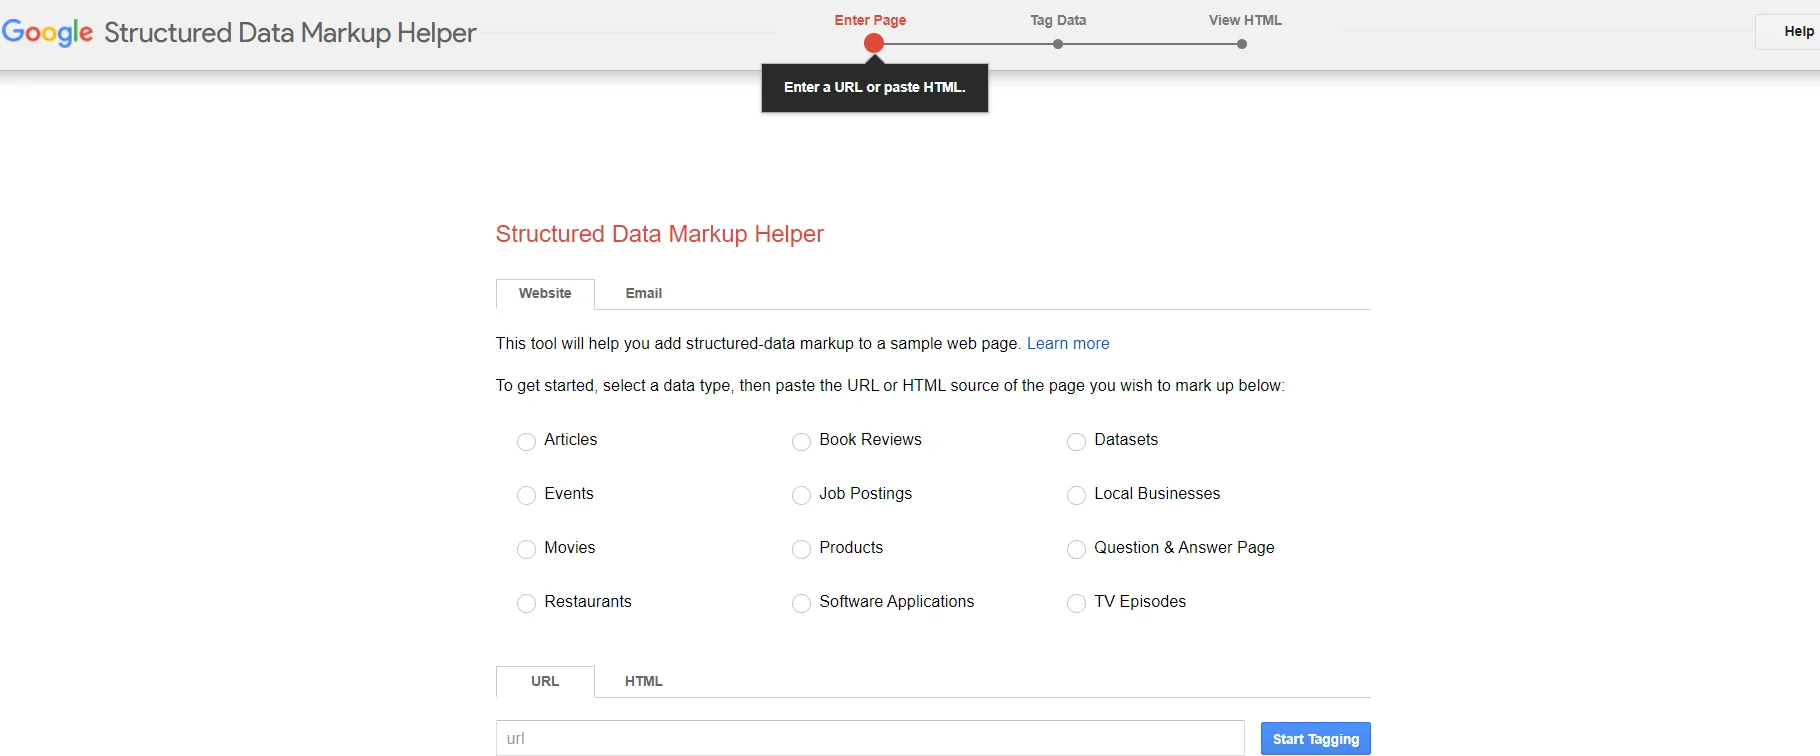 Google  Structured Data Markup Helper 
Search Engine Optimization Tools 